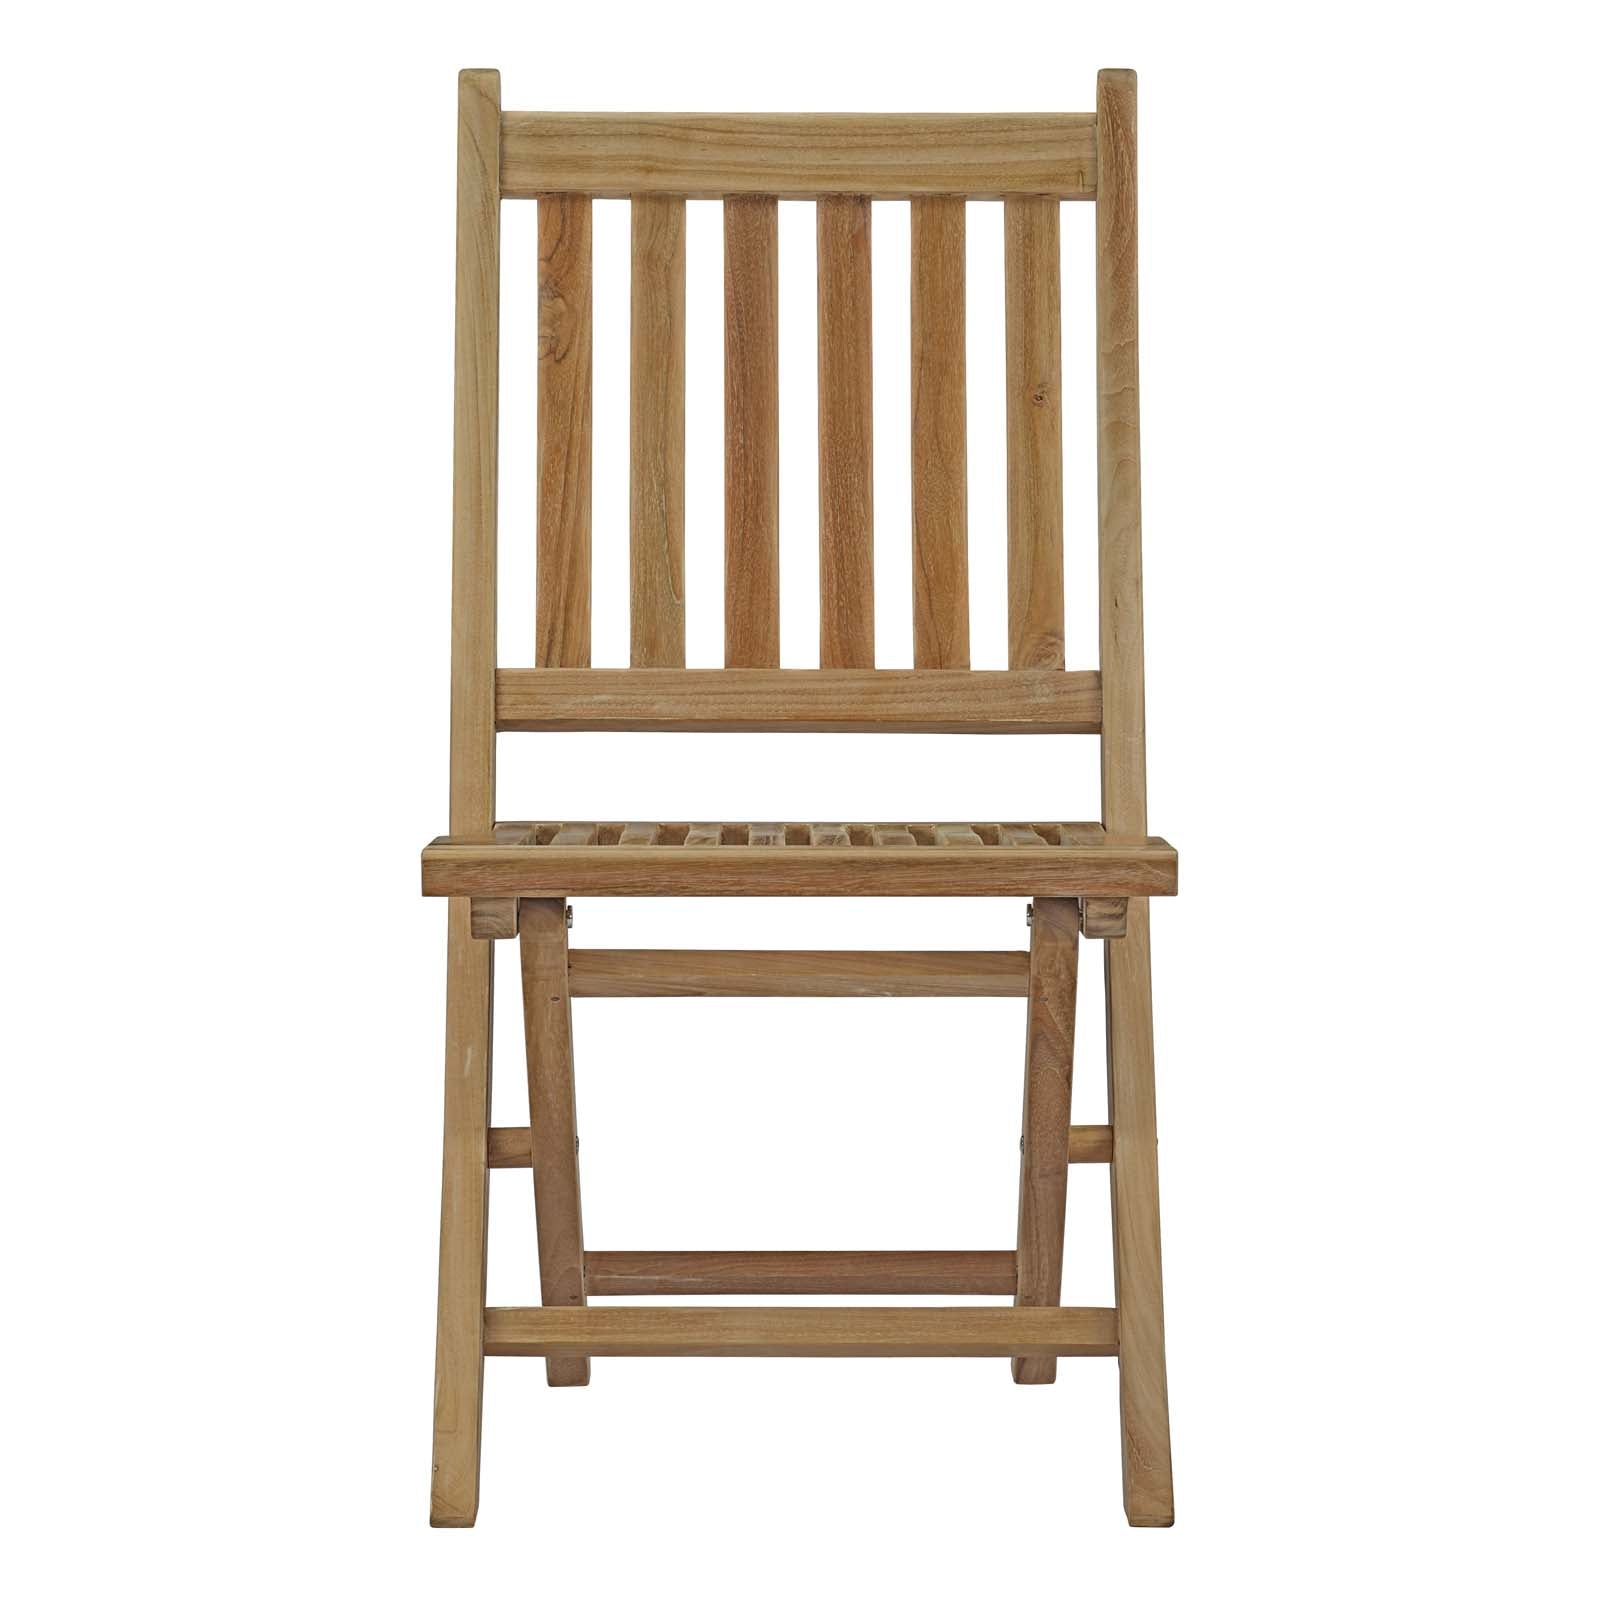 Modway - Marina Outdoor Patio Teak Folding Chair - EEI-2702